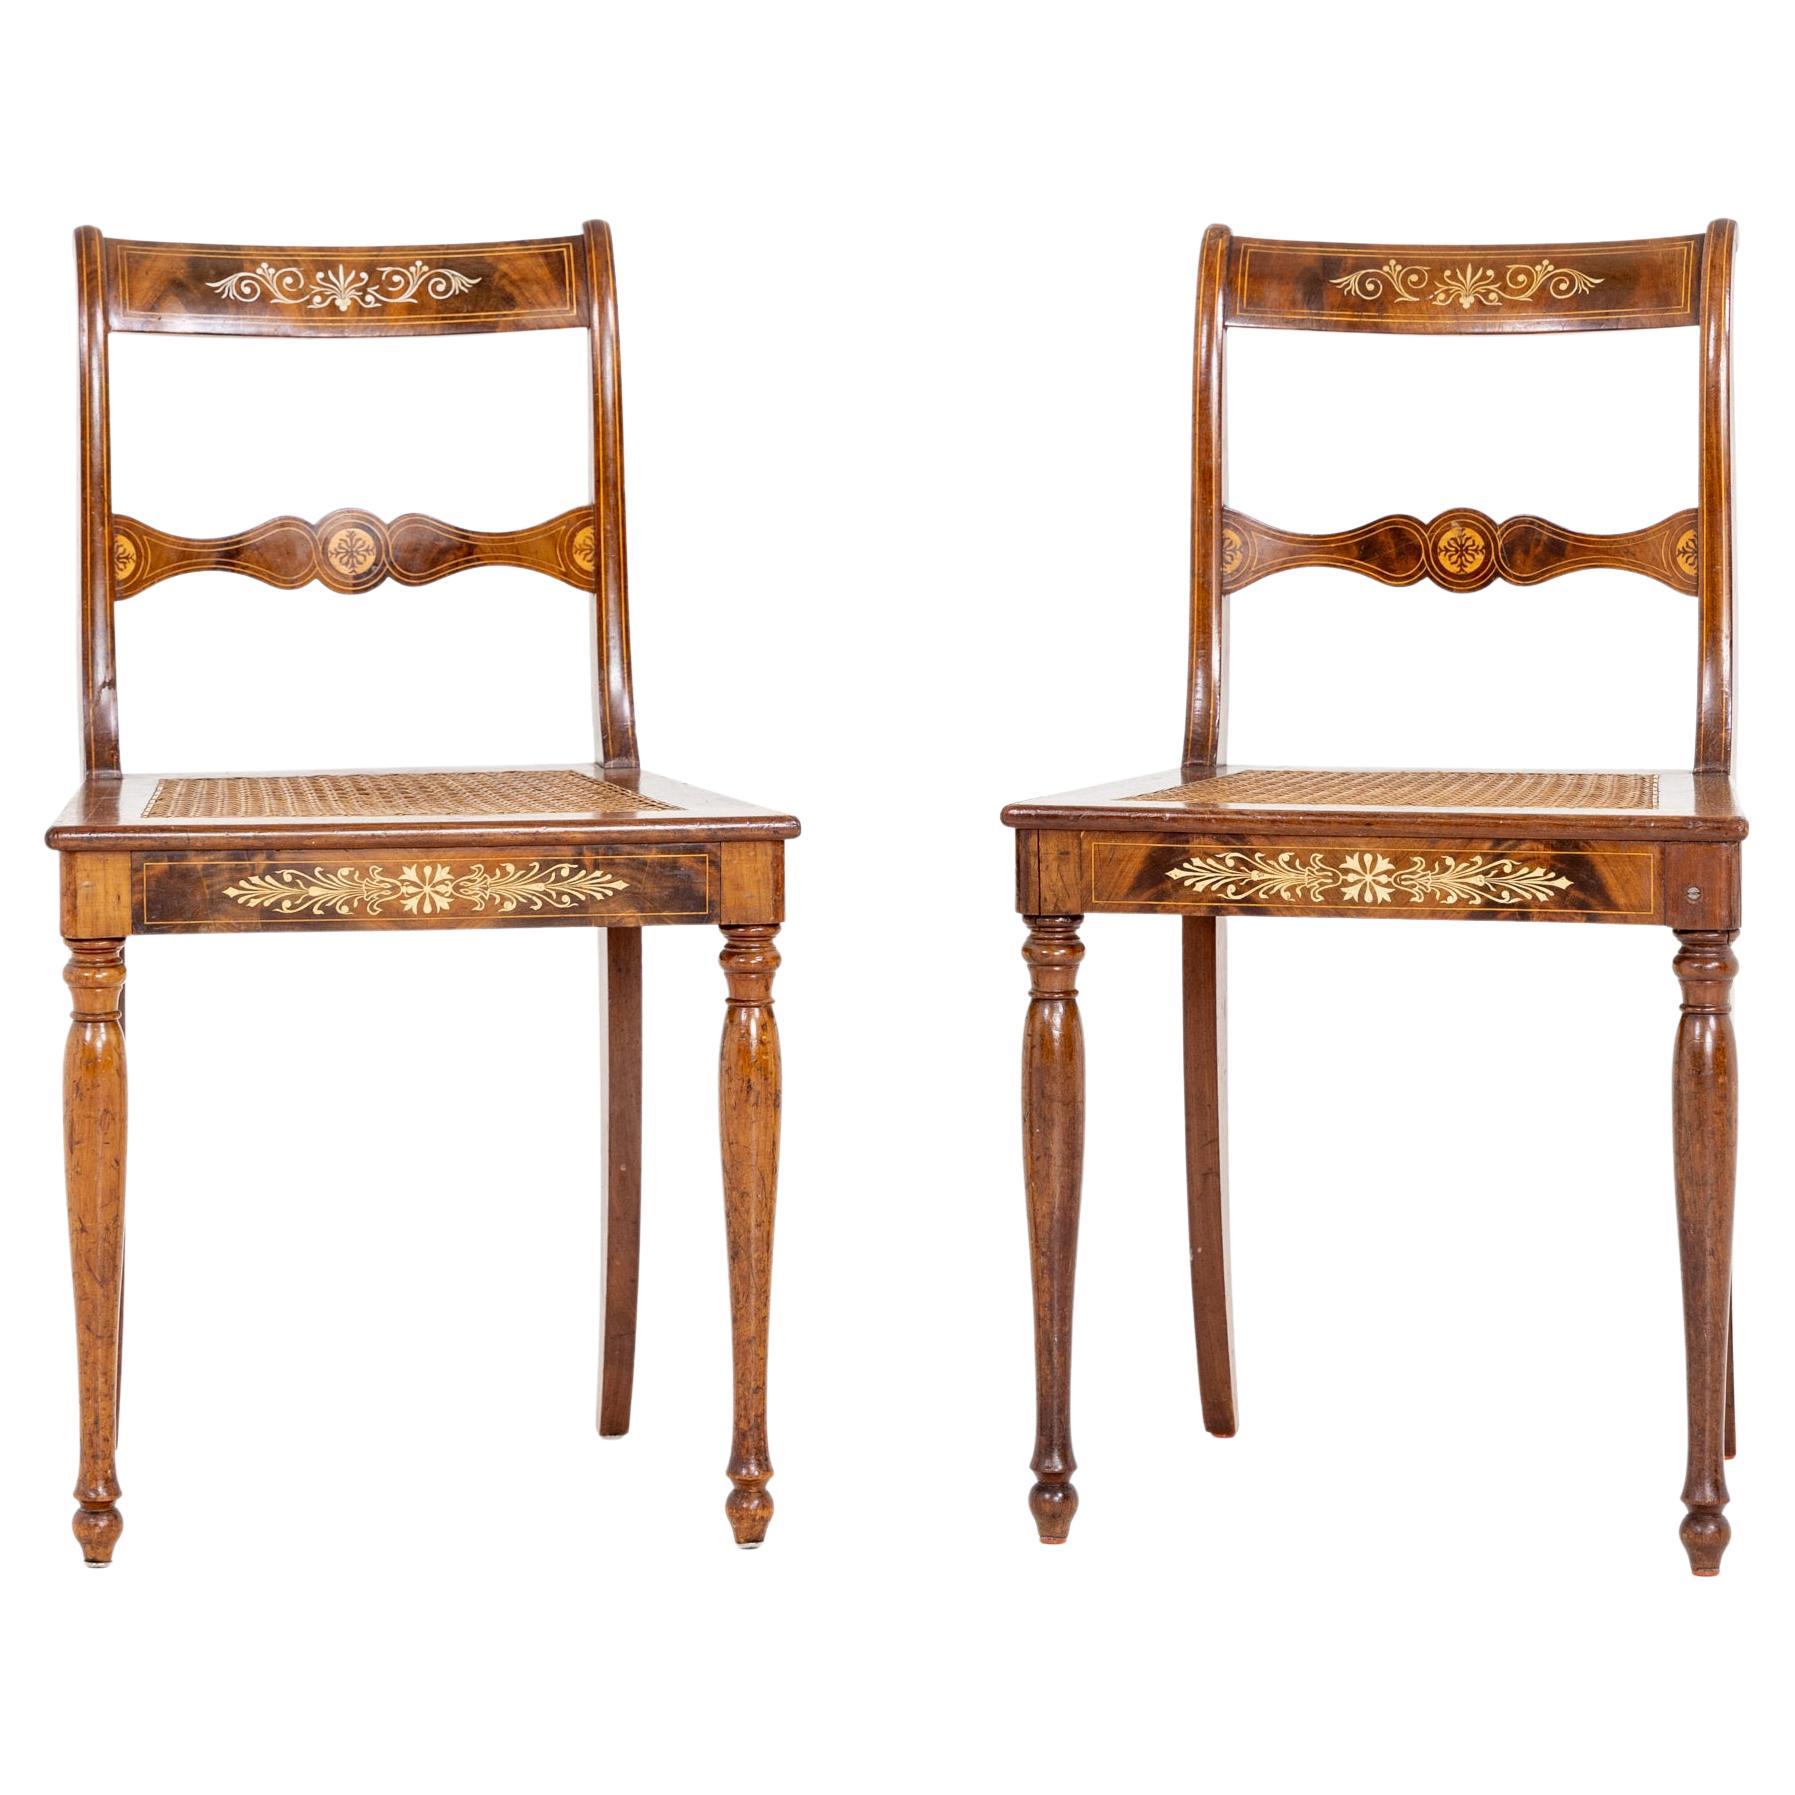 Pair of chairs in mahogany with paste inlays and wickerwork, Germany, Berlin, c. 1825/30. Cf. 1987 Orangerie catalog, catalog no. 88, Antike Welt 1996/6, p. 484, fig. 16; S. Hinz, Innenraum und Möbel, Berlin 1980, fig. 578.